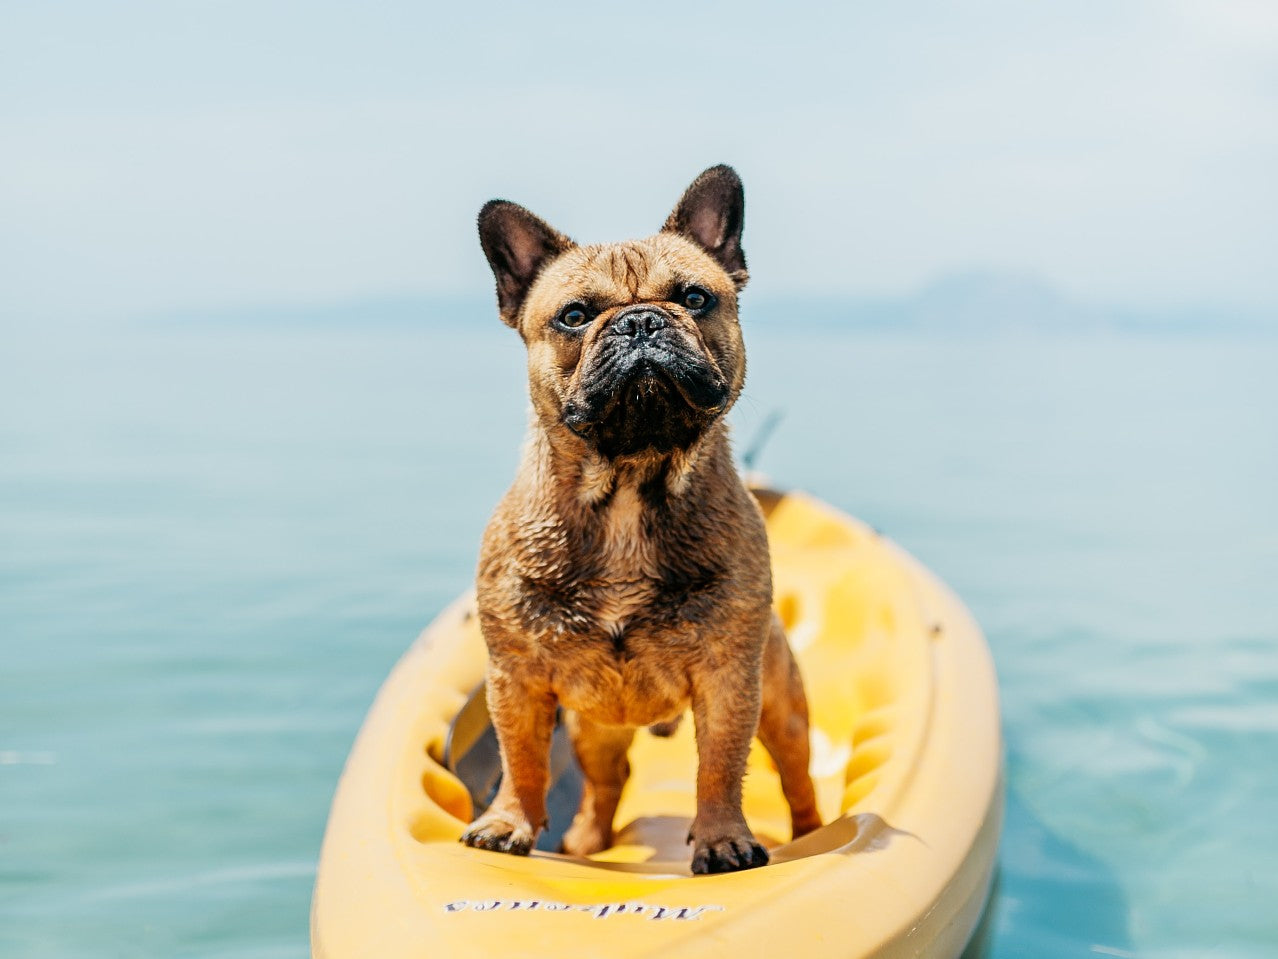 French Bulldog on Kayak by Angelo Pantazis on Unsplash